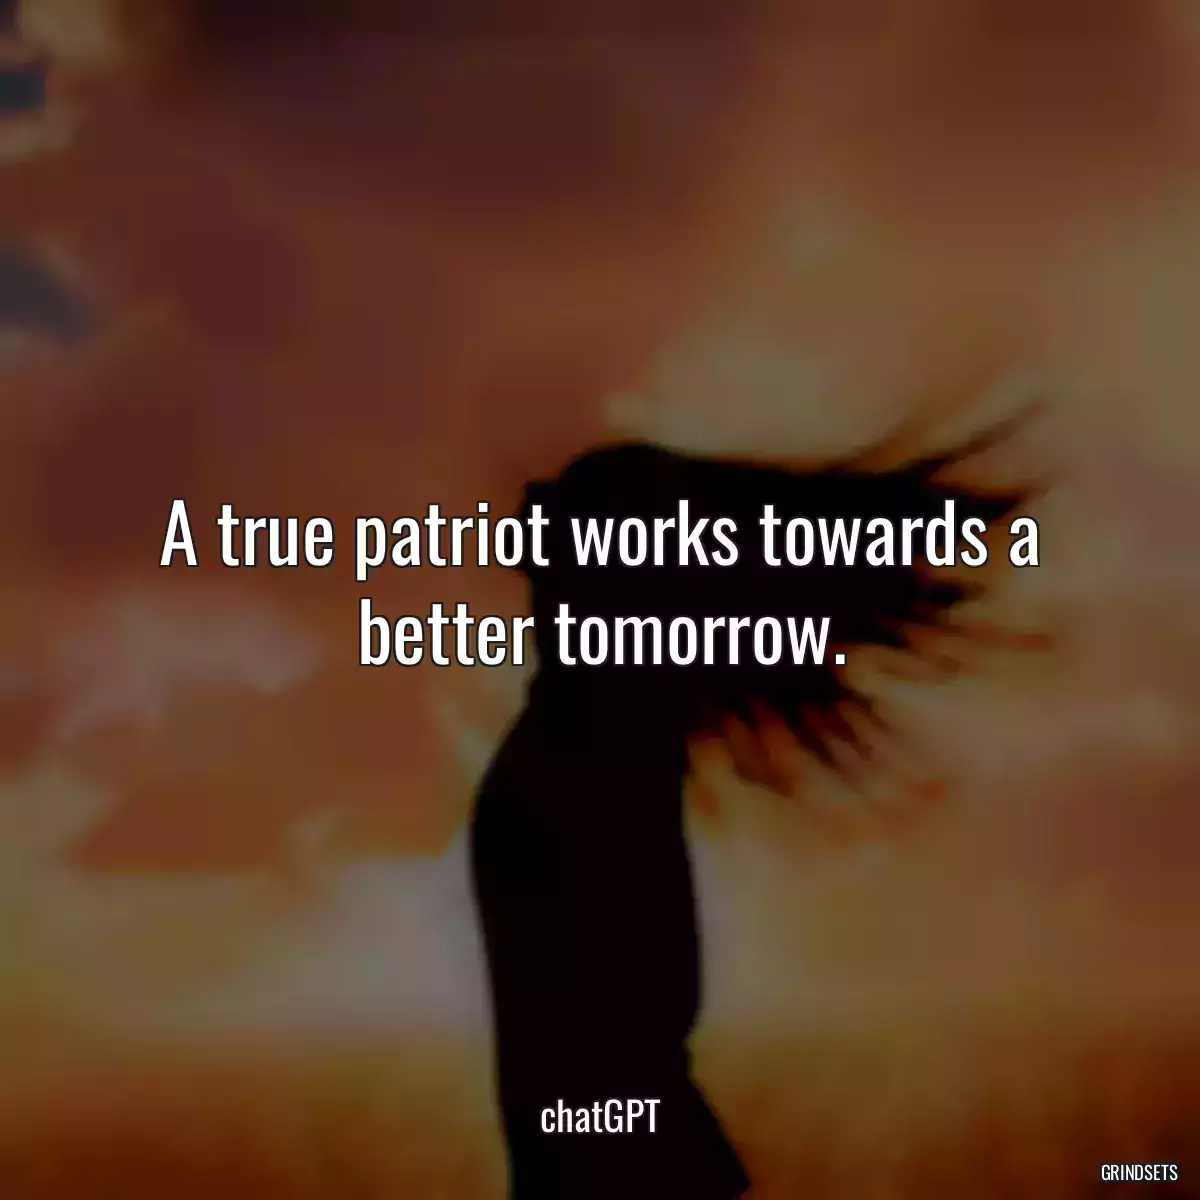 A true patriot works towards a better tomorrow.